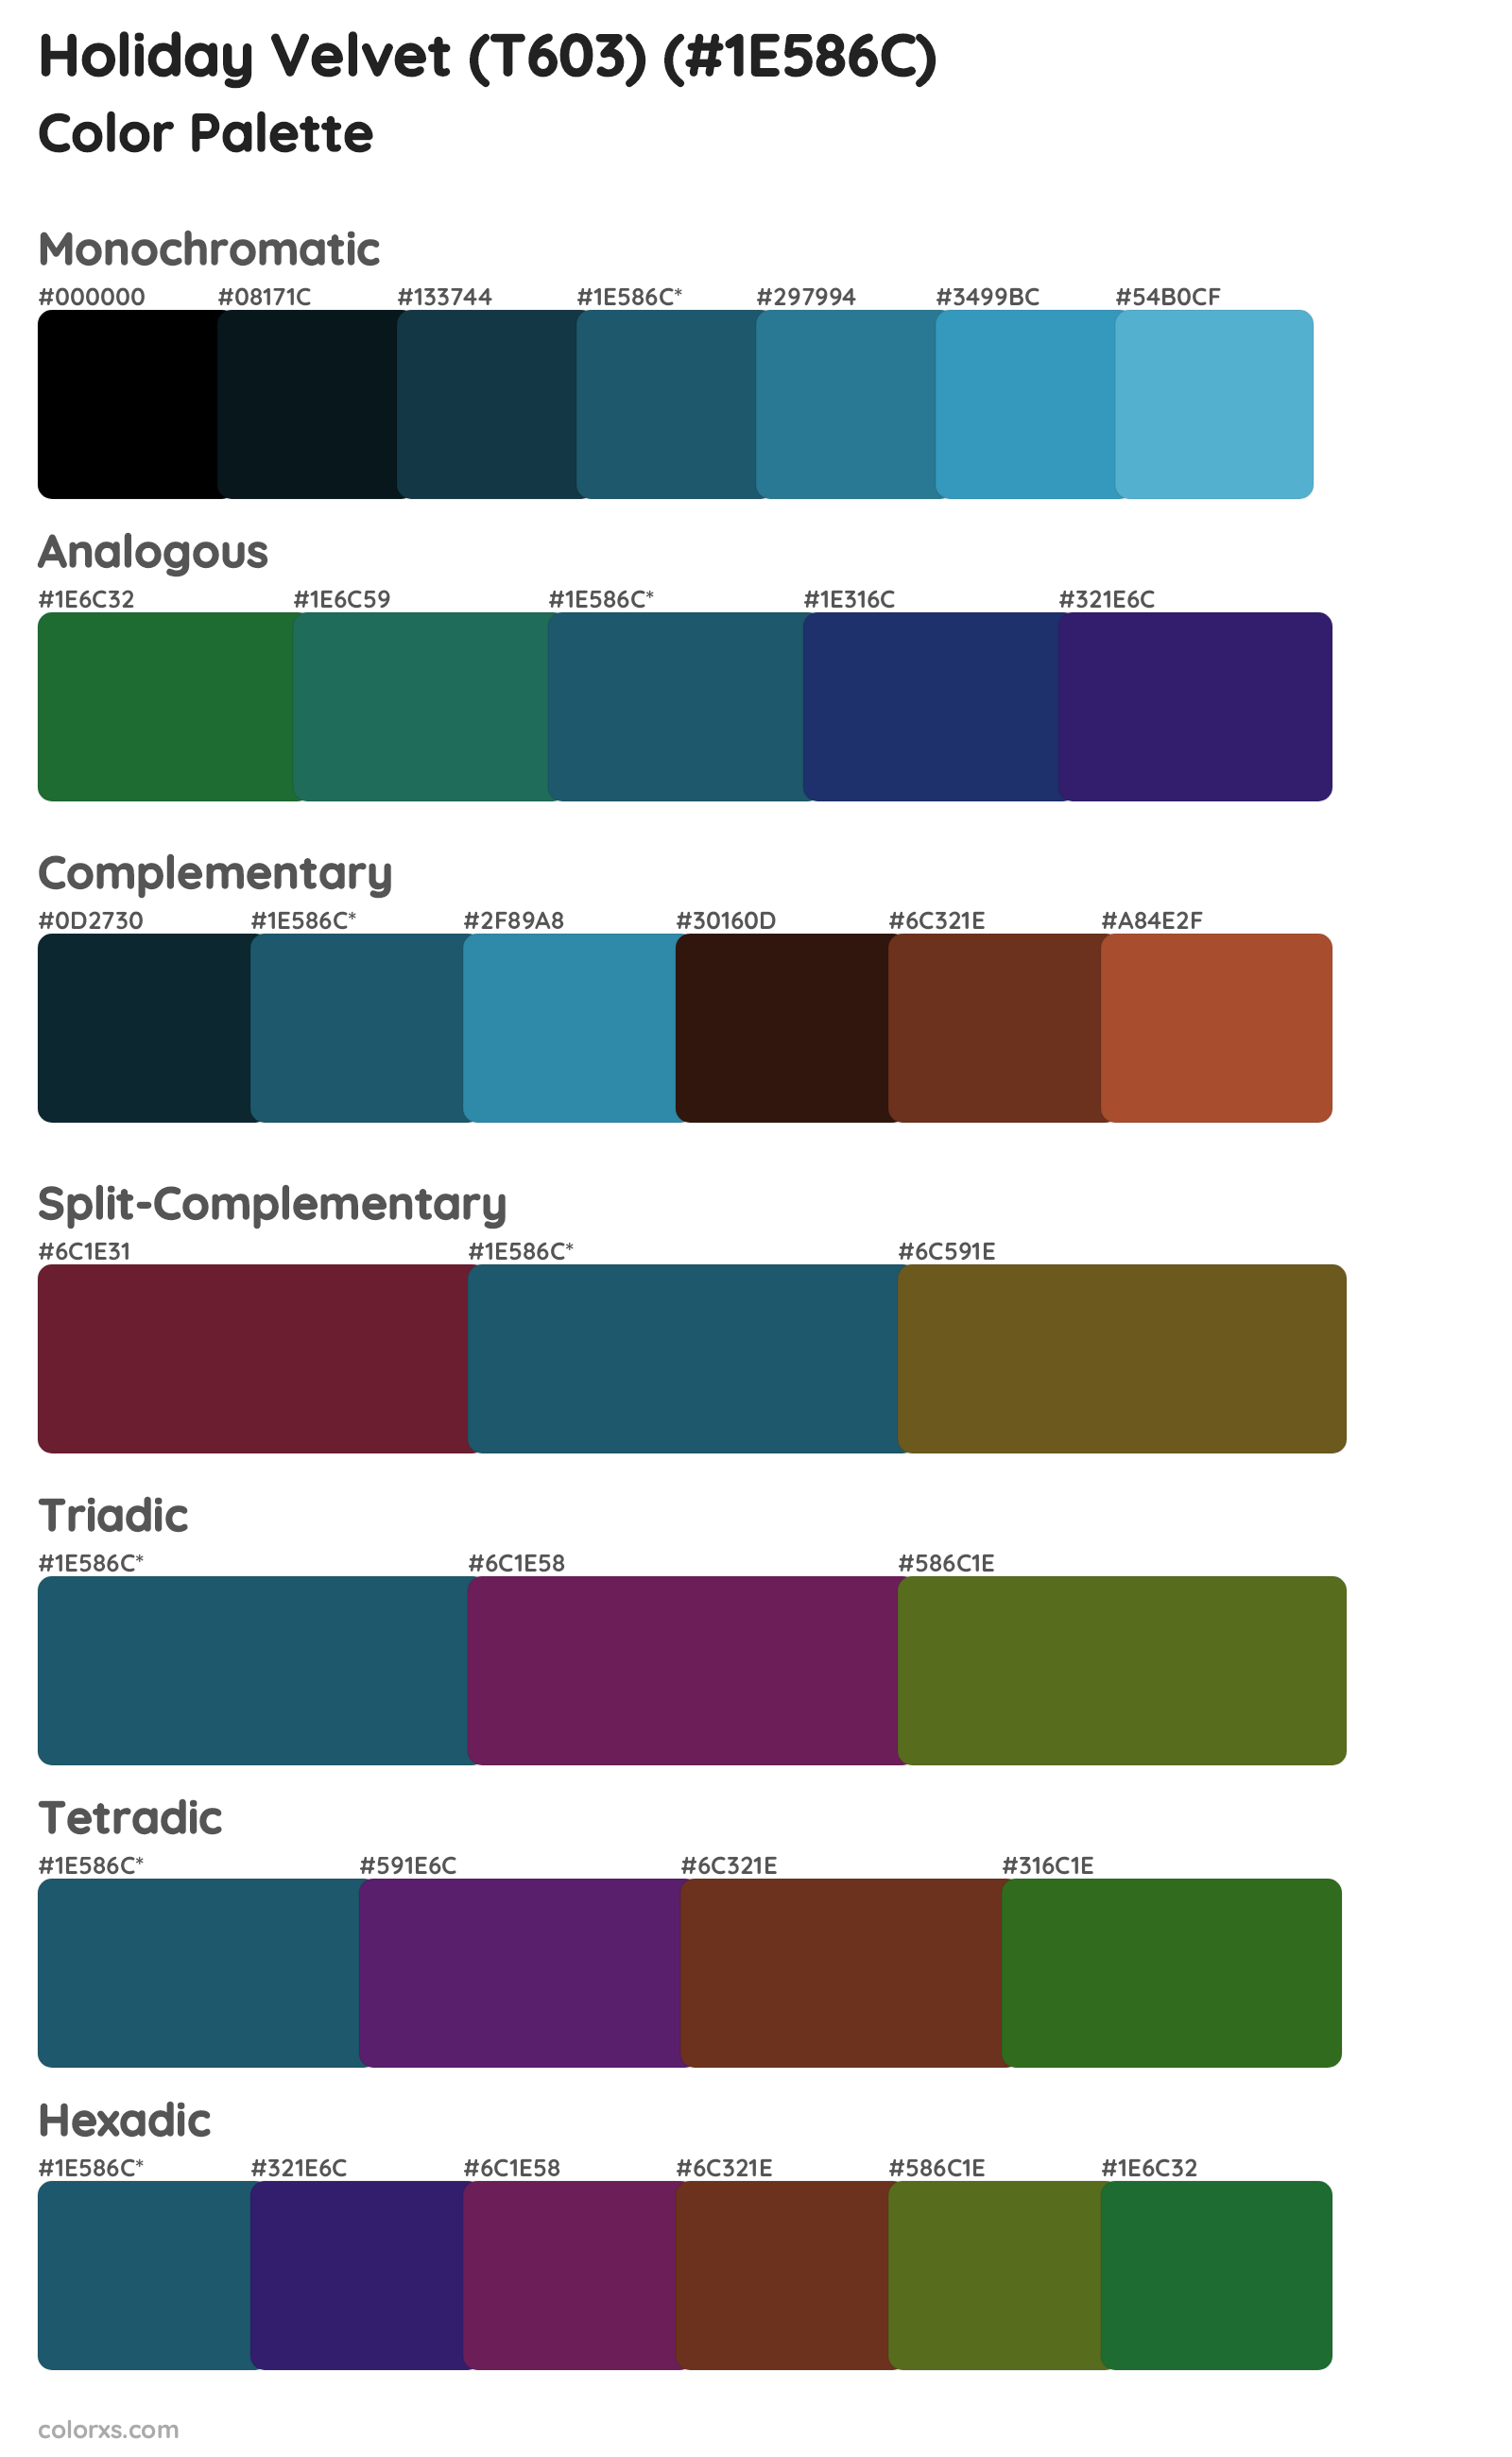 Holiday Velvet (T603) Color Scheme Palettes